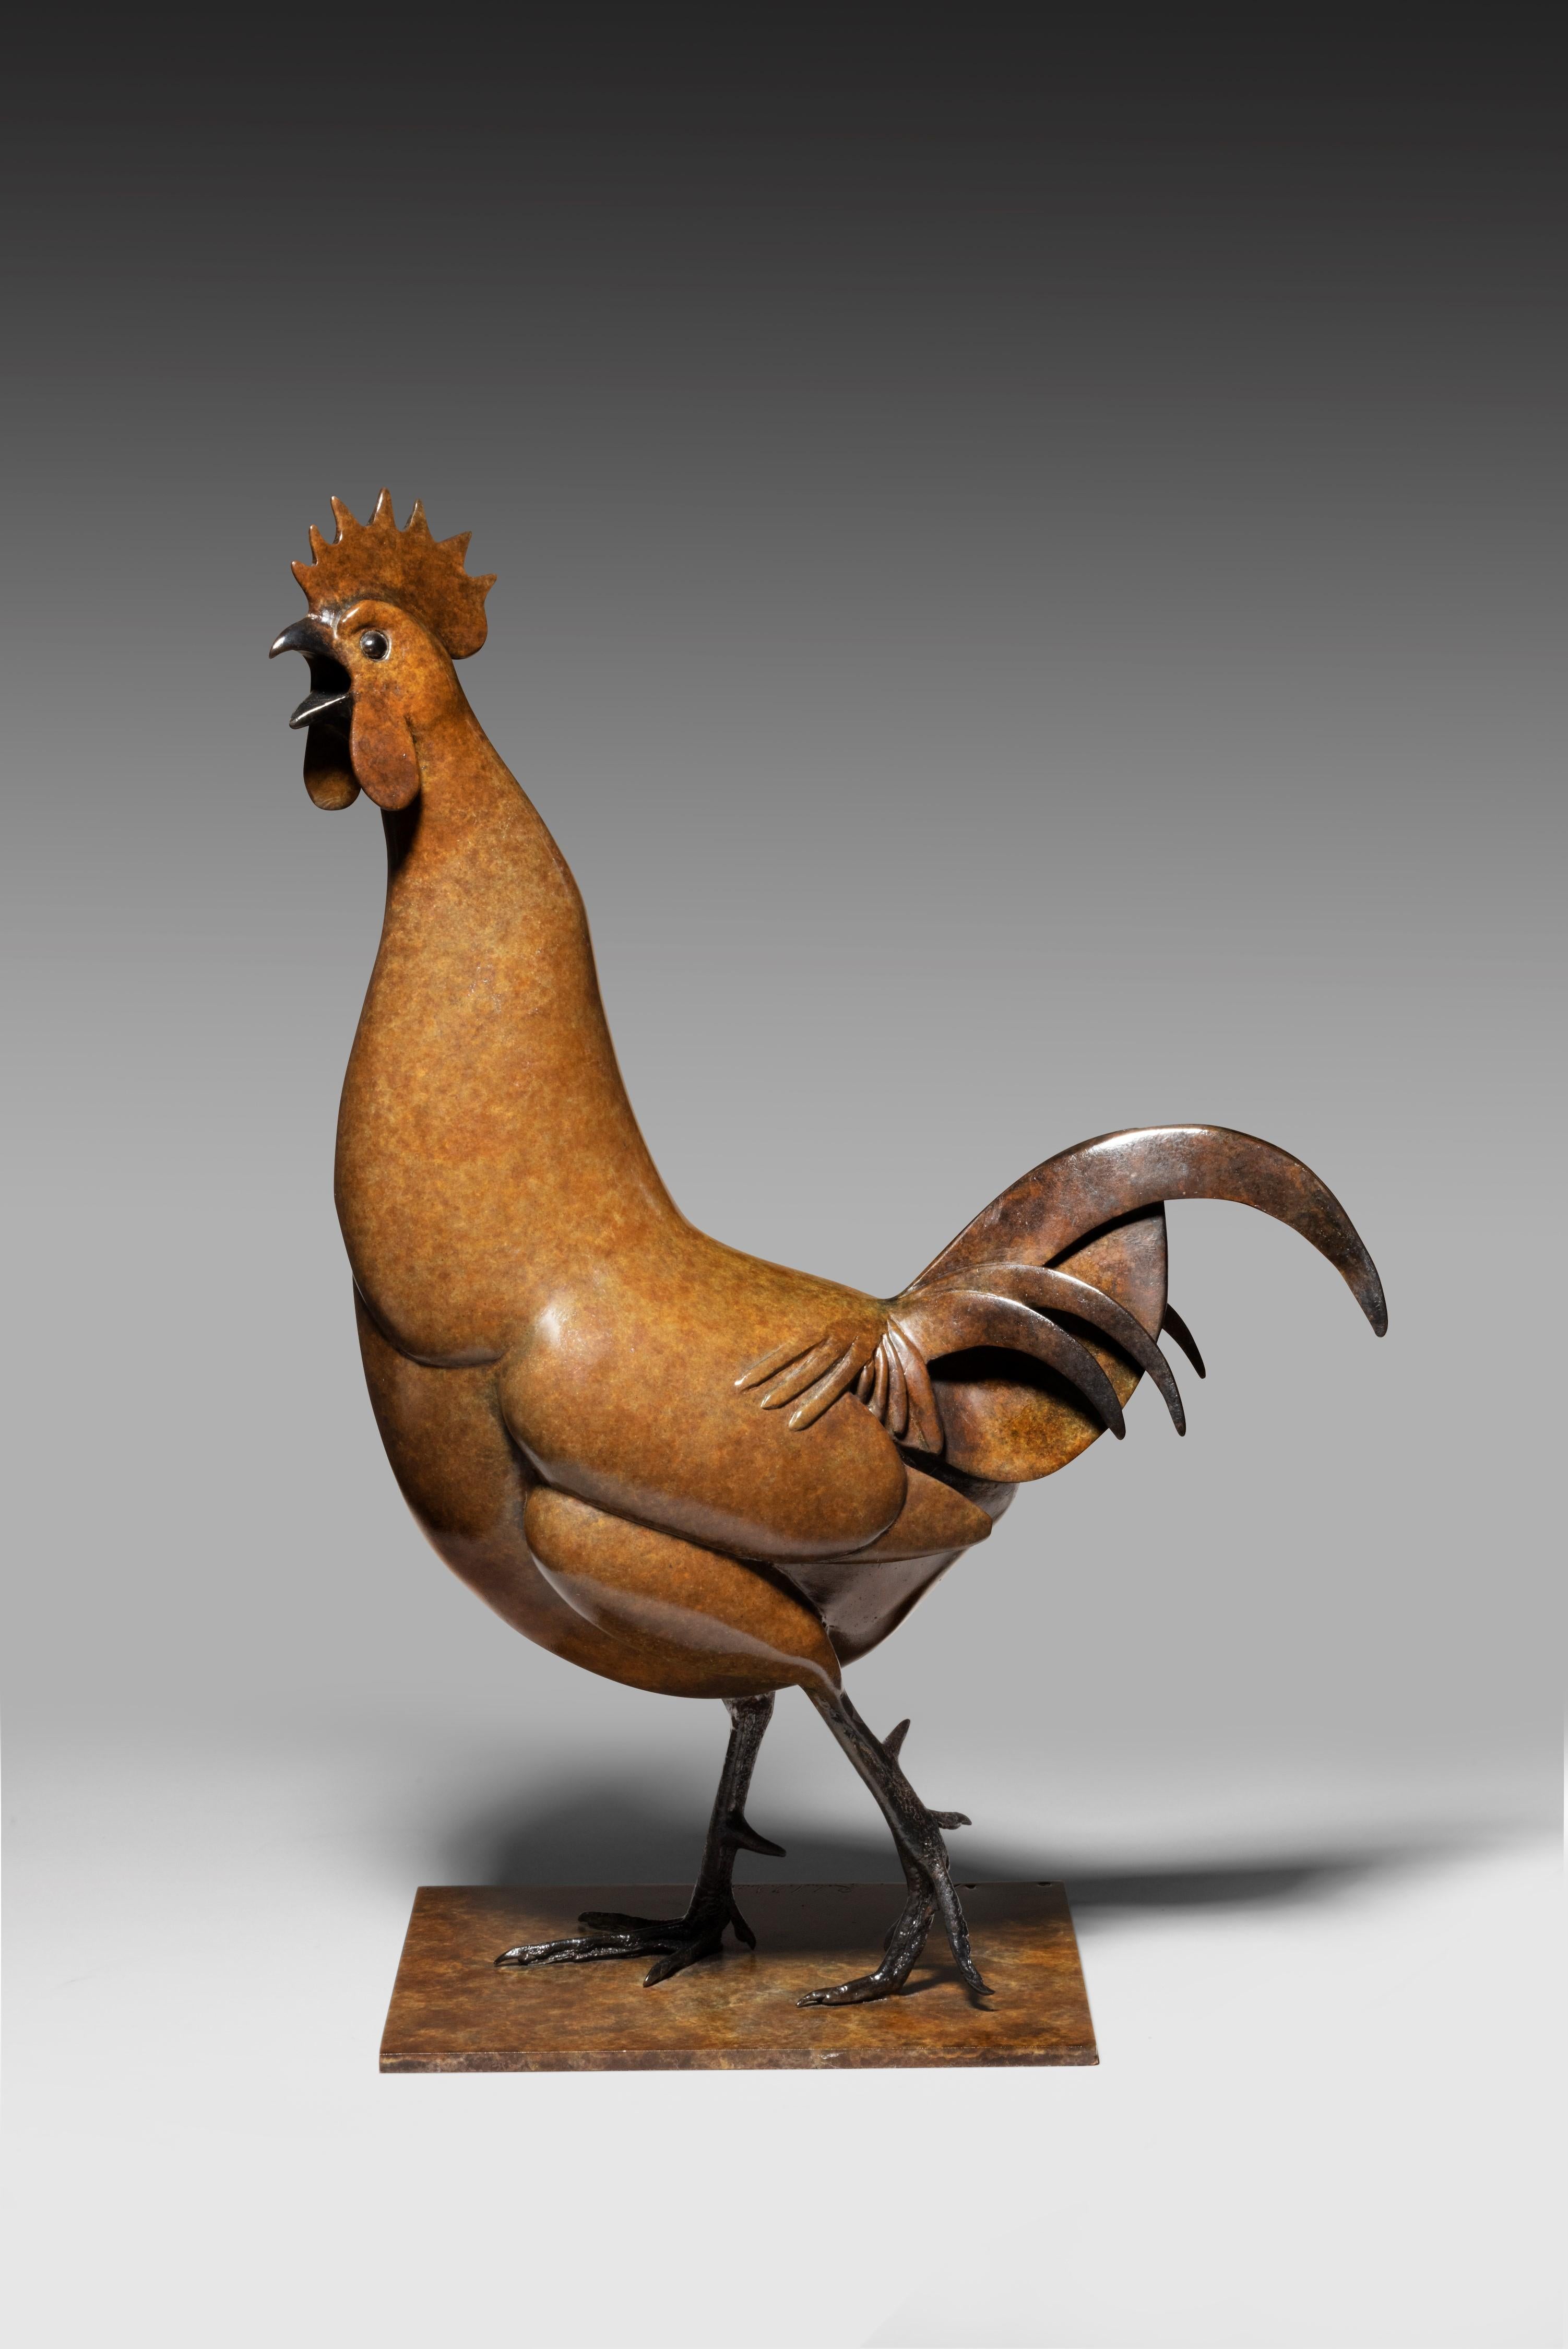 Richard Smith Figurative Sculpture - 'Cockerel' Bronze Animal Sculpture of a Brown Cockerel. Farm wildlife sculpture